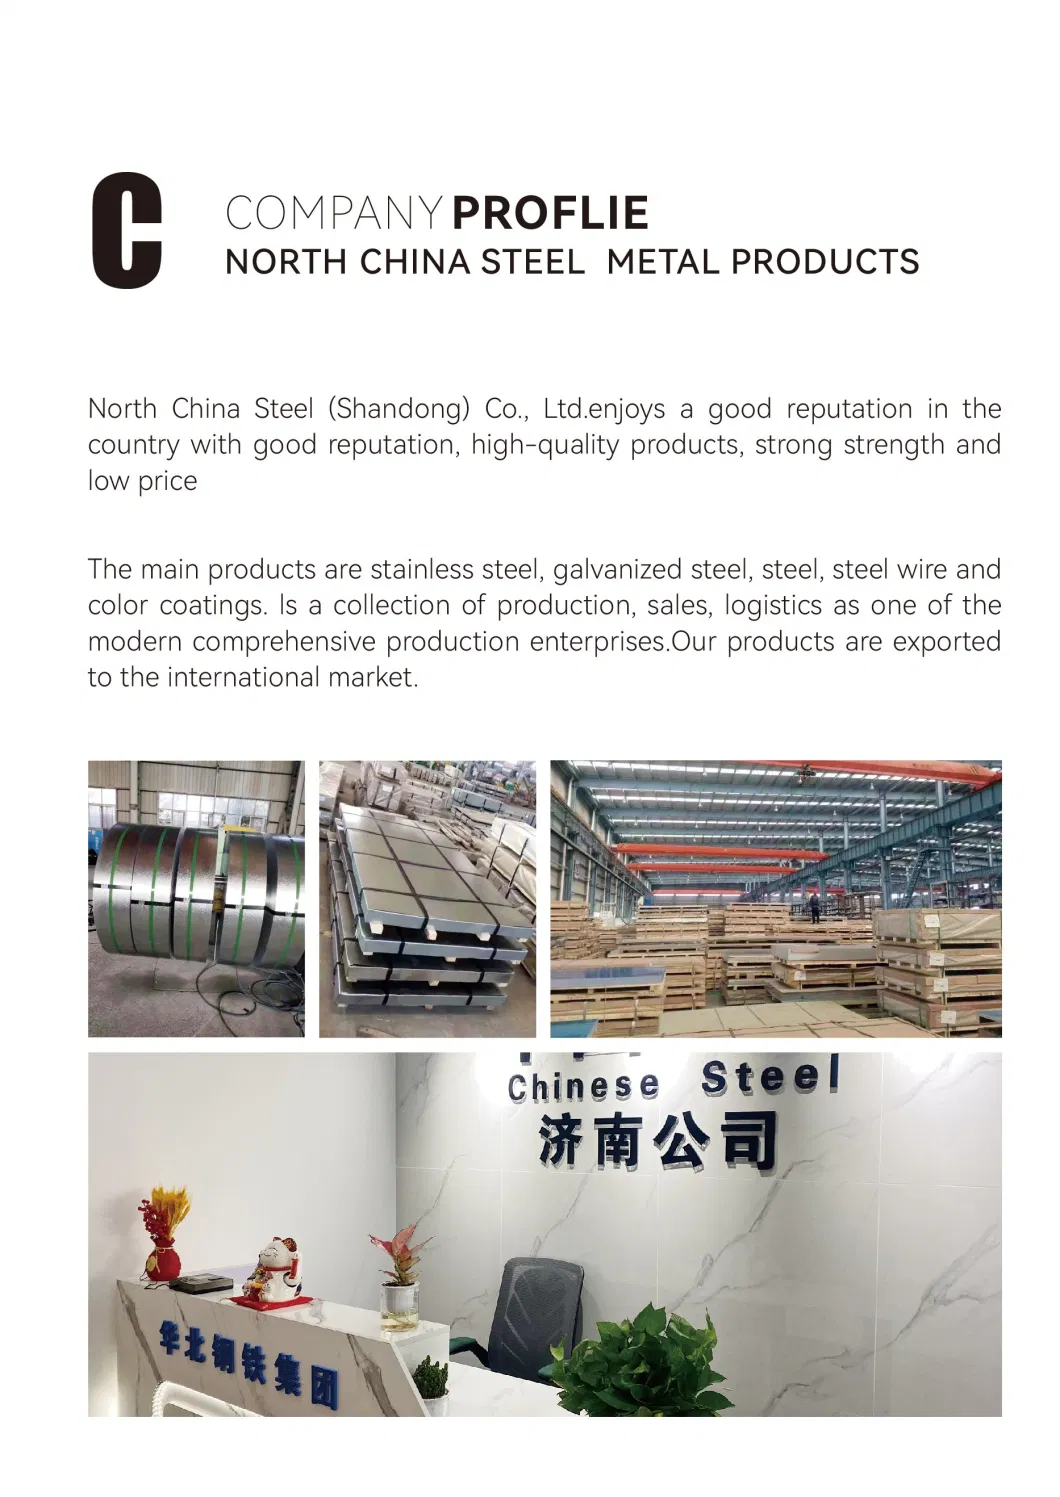 China Factory Od 3 mm~500 mm Aluminium Alloy Steel Bar 4032 6061 6063 6060 6082 7075 T6 Low Price Aluminium Billet Round Rod